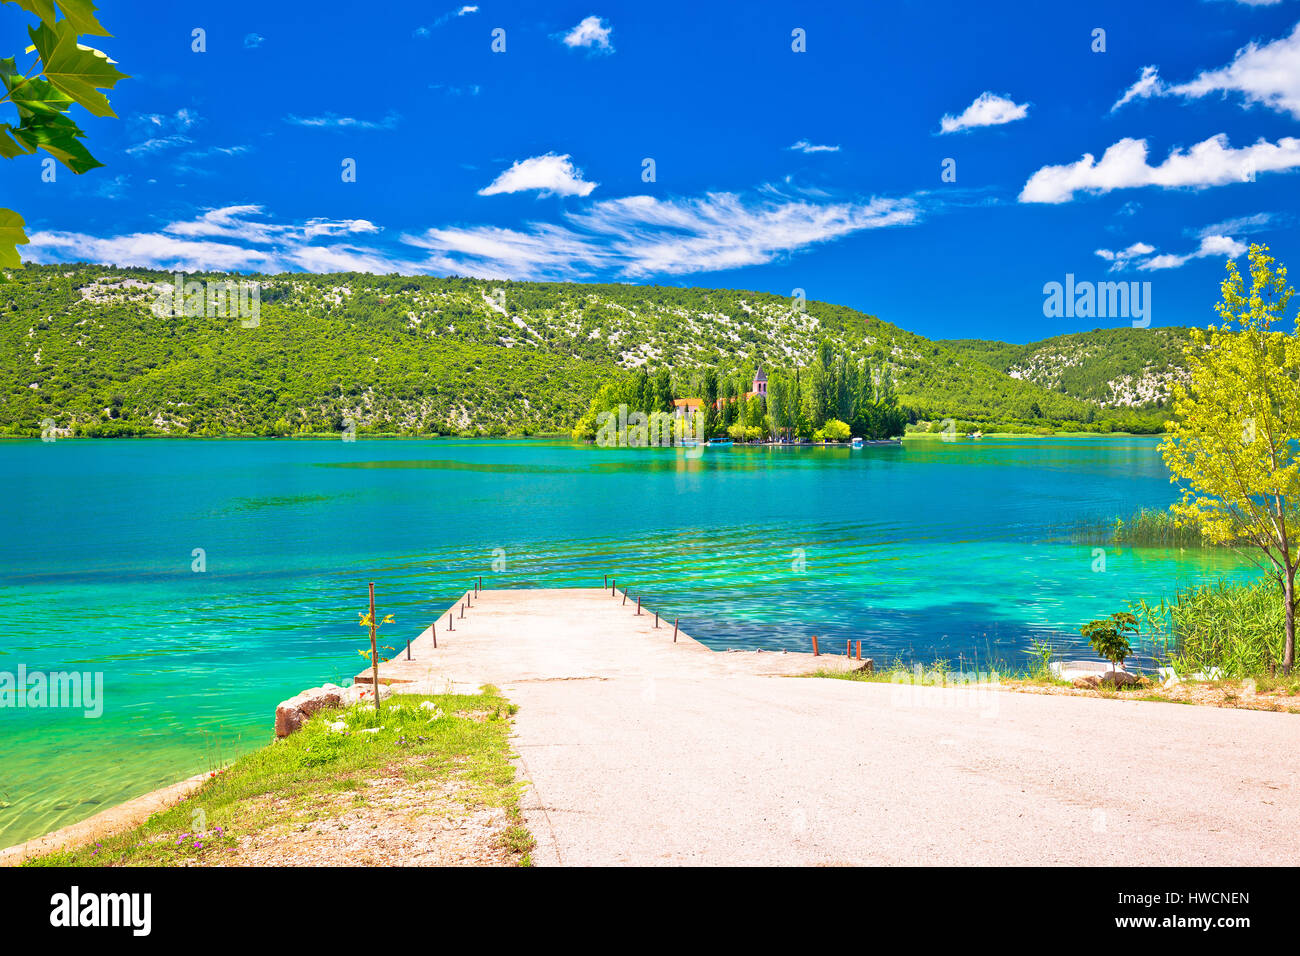 Visovac lake and island monastery in Krka river national park, Dalmatia, Croatia Stock Photo